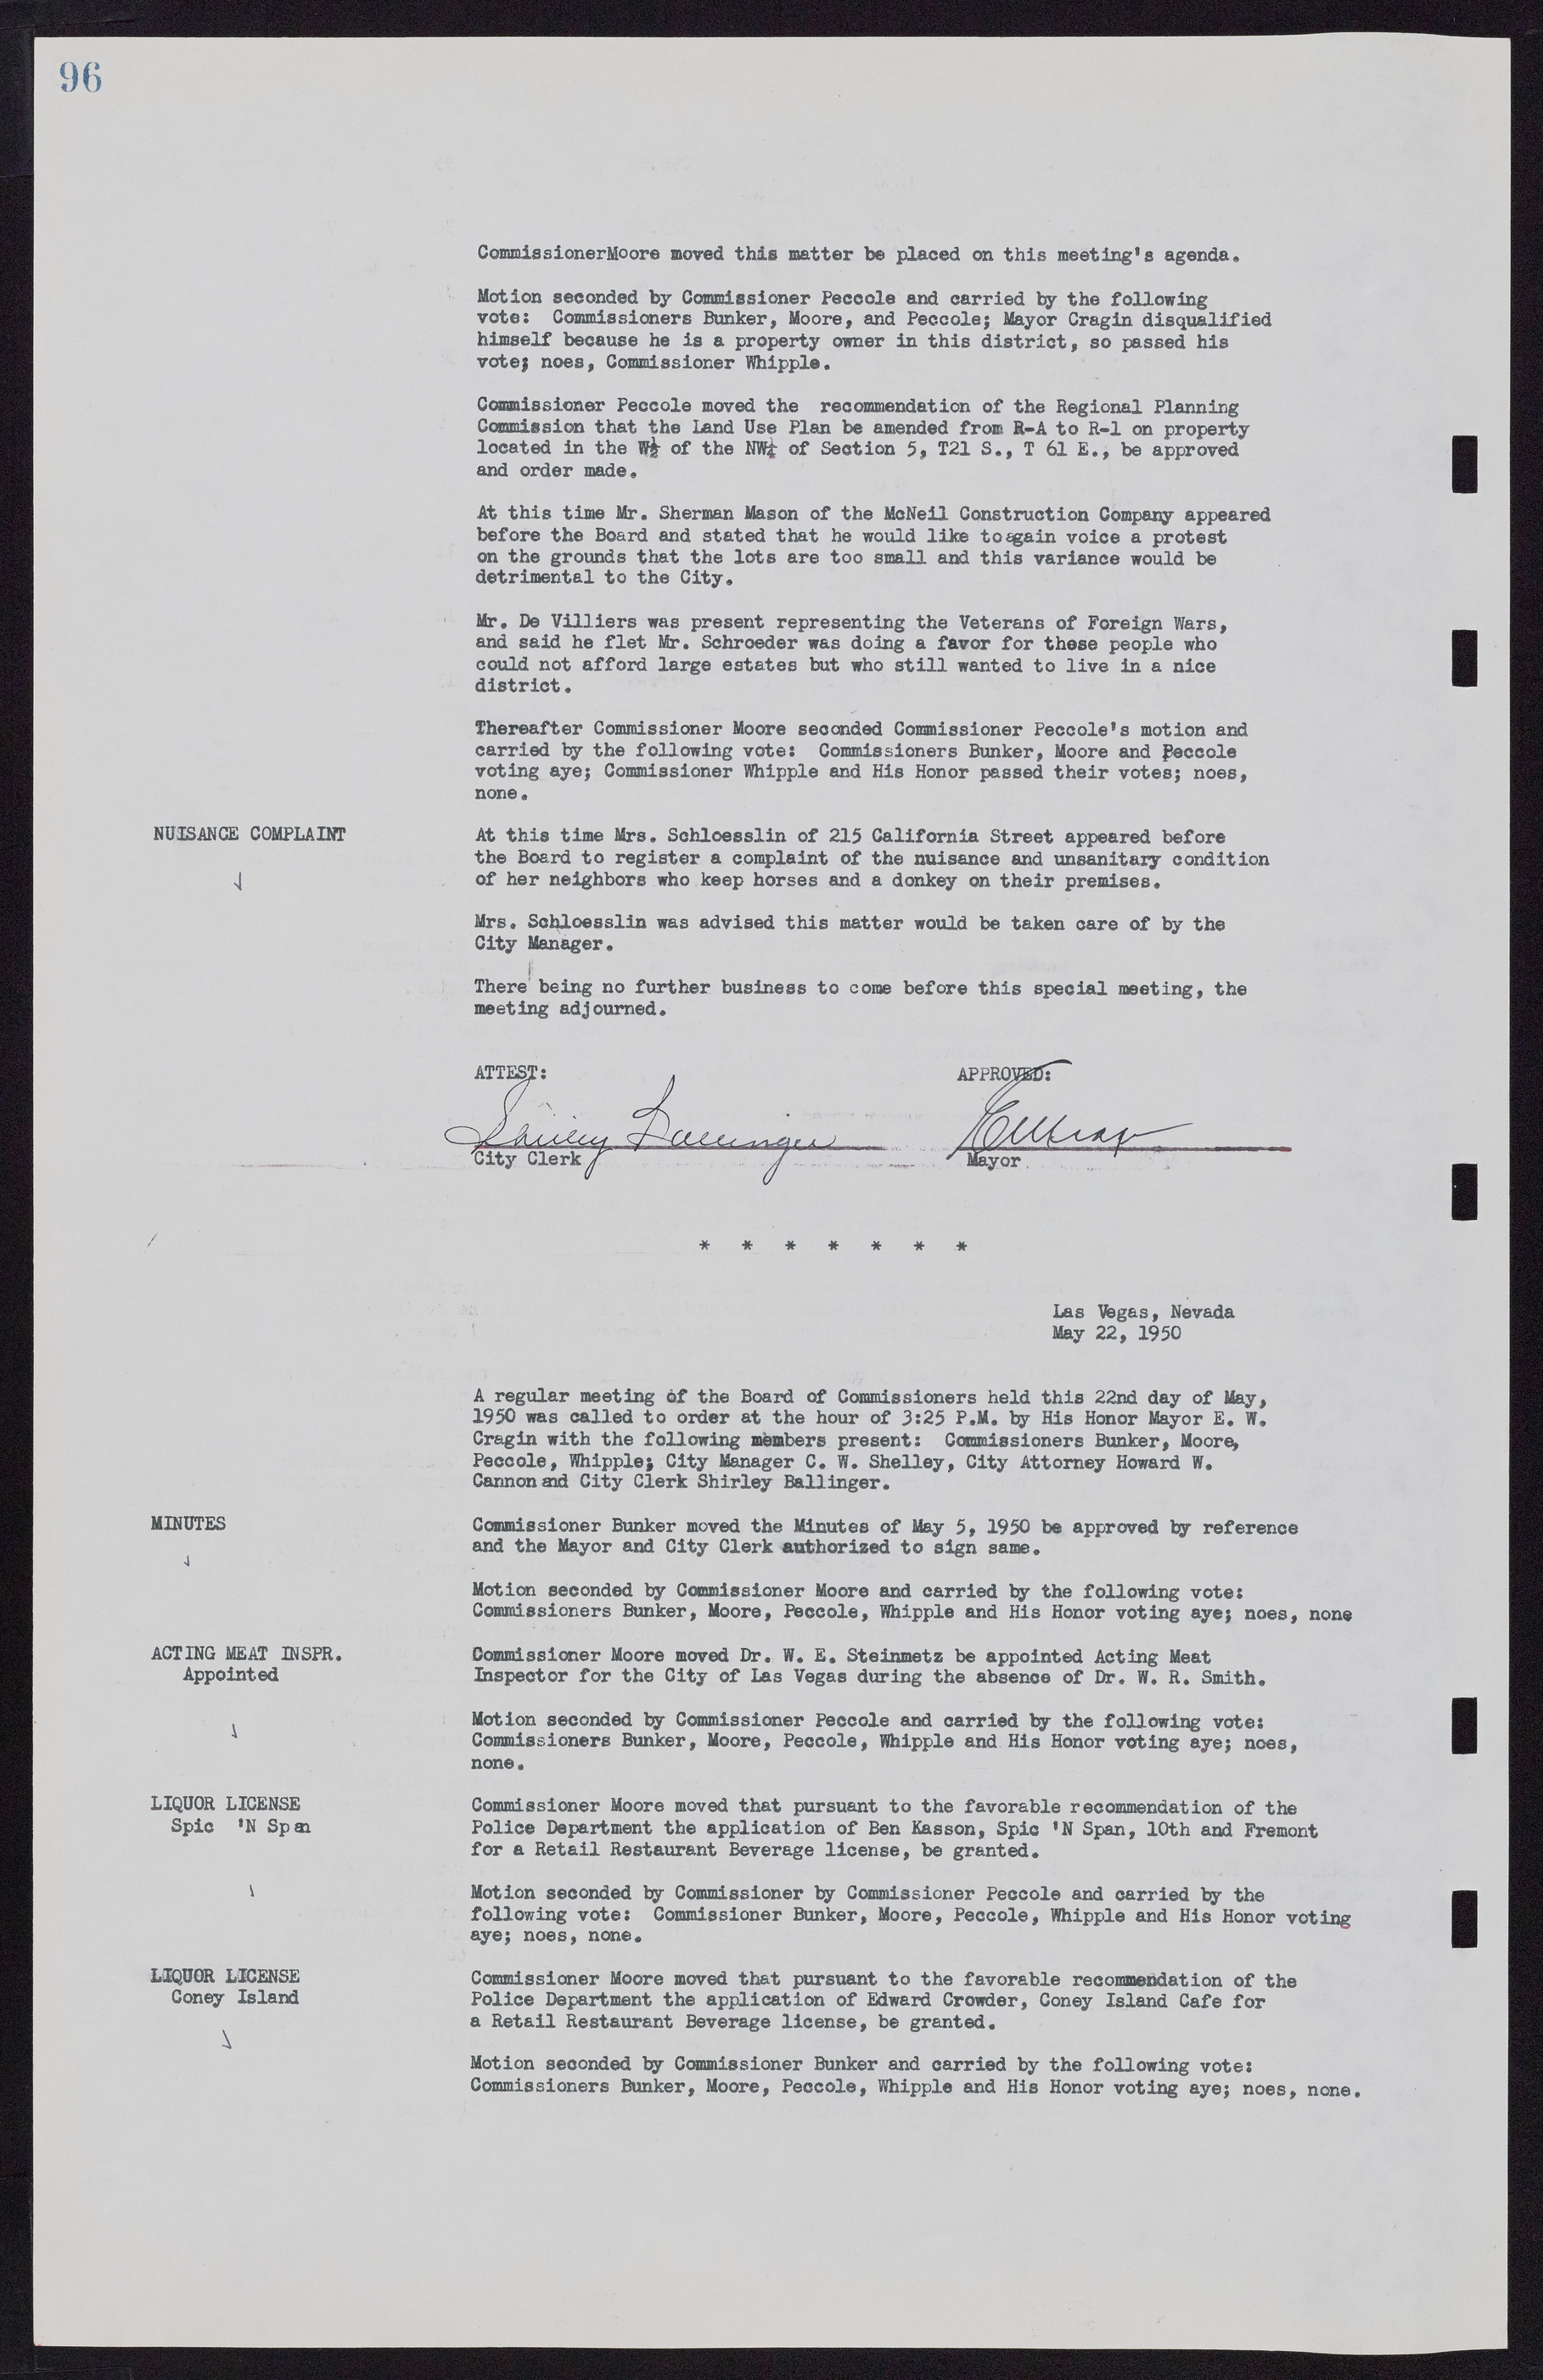 Las Vegas City Commission Minutes, November 7, 1949 to May 21, 1952, lvc000007-104